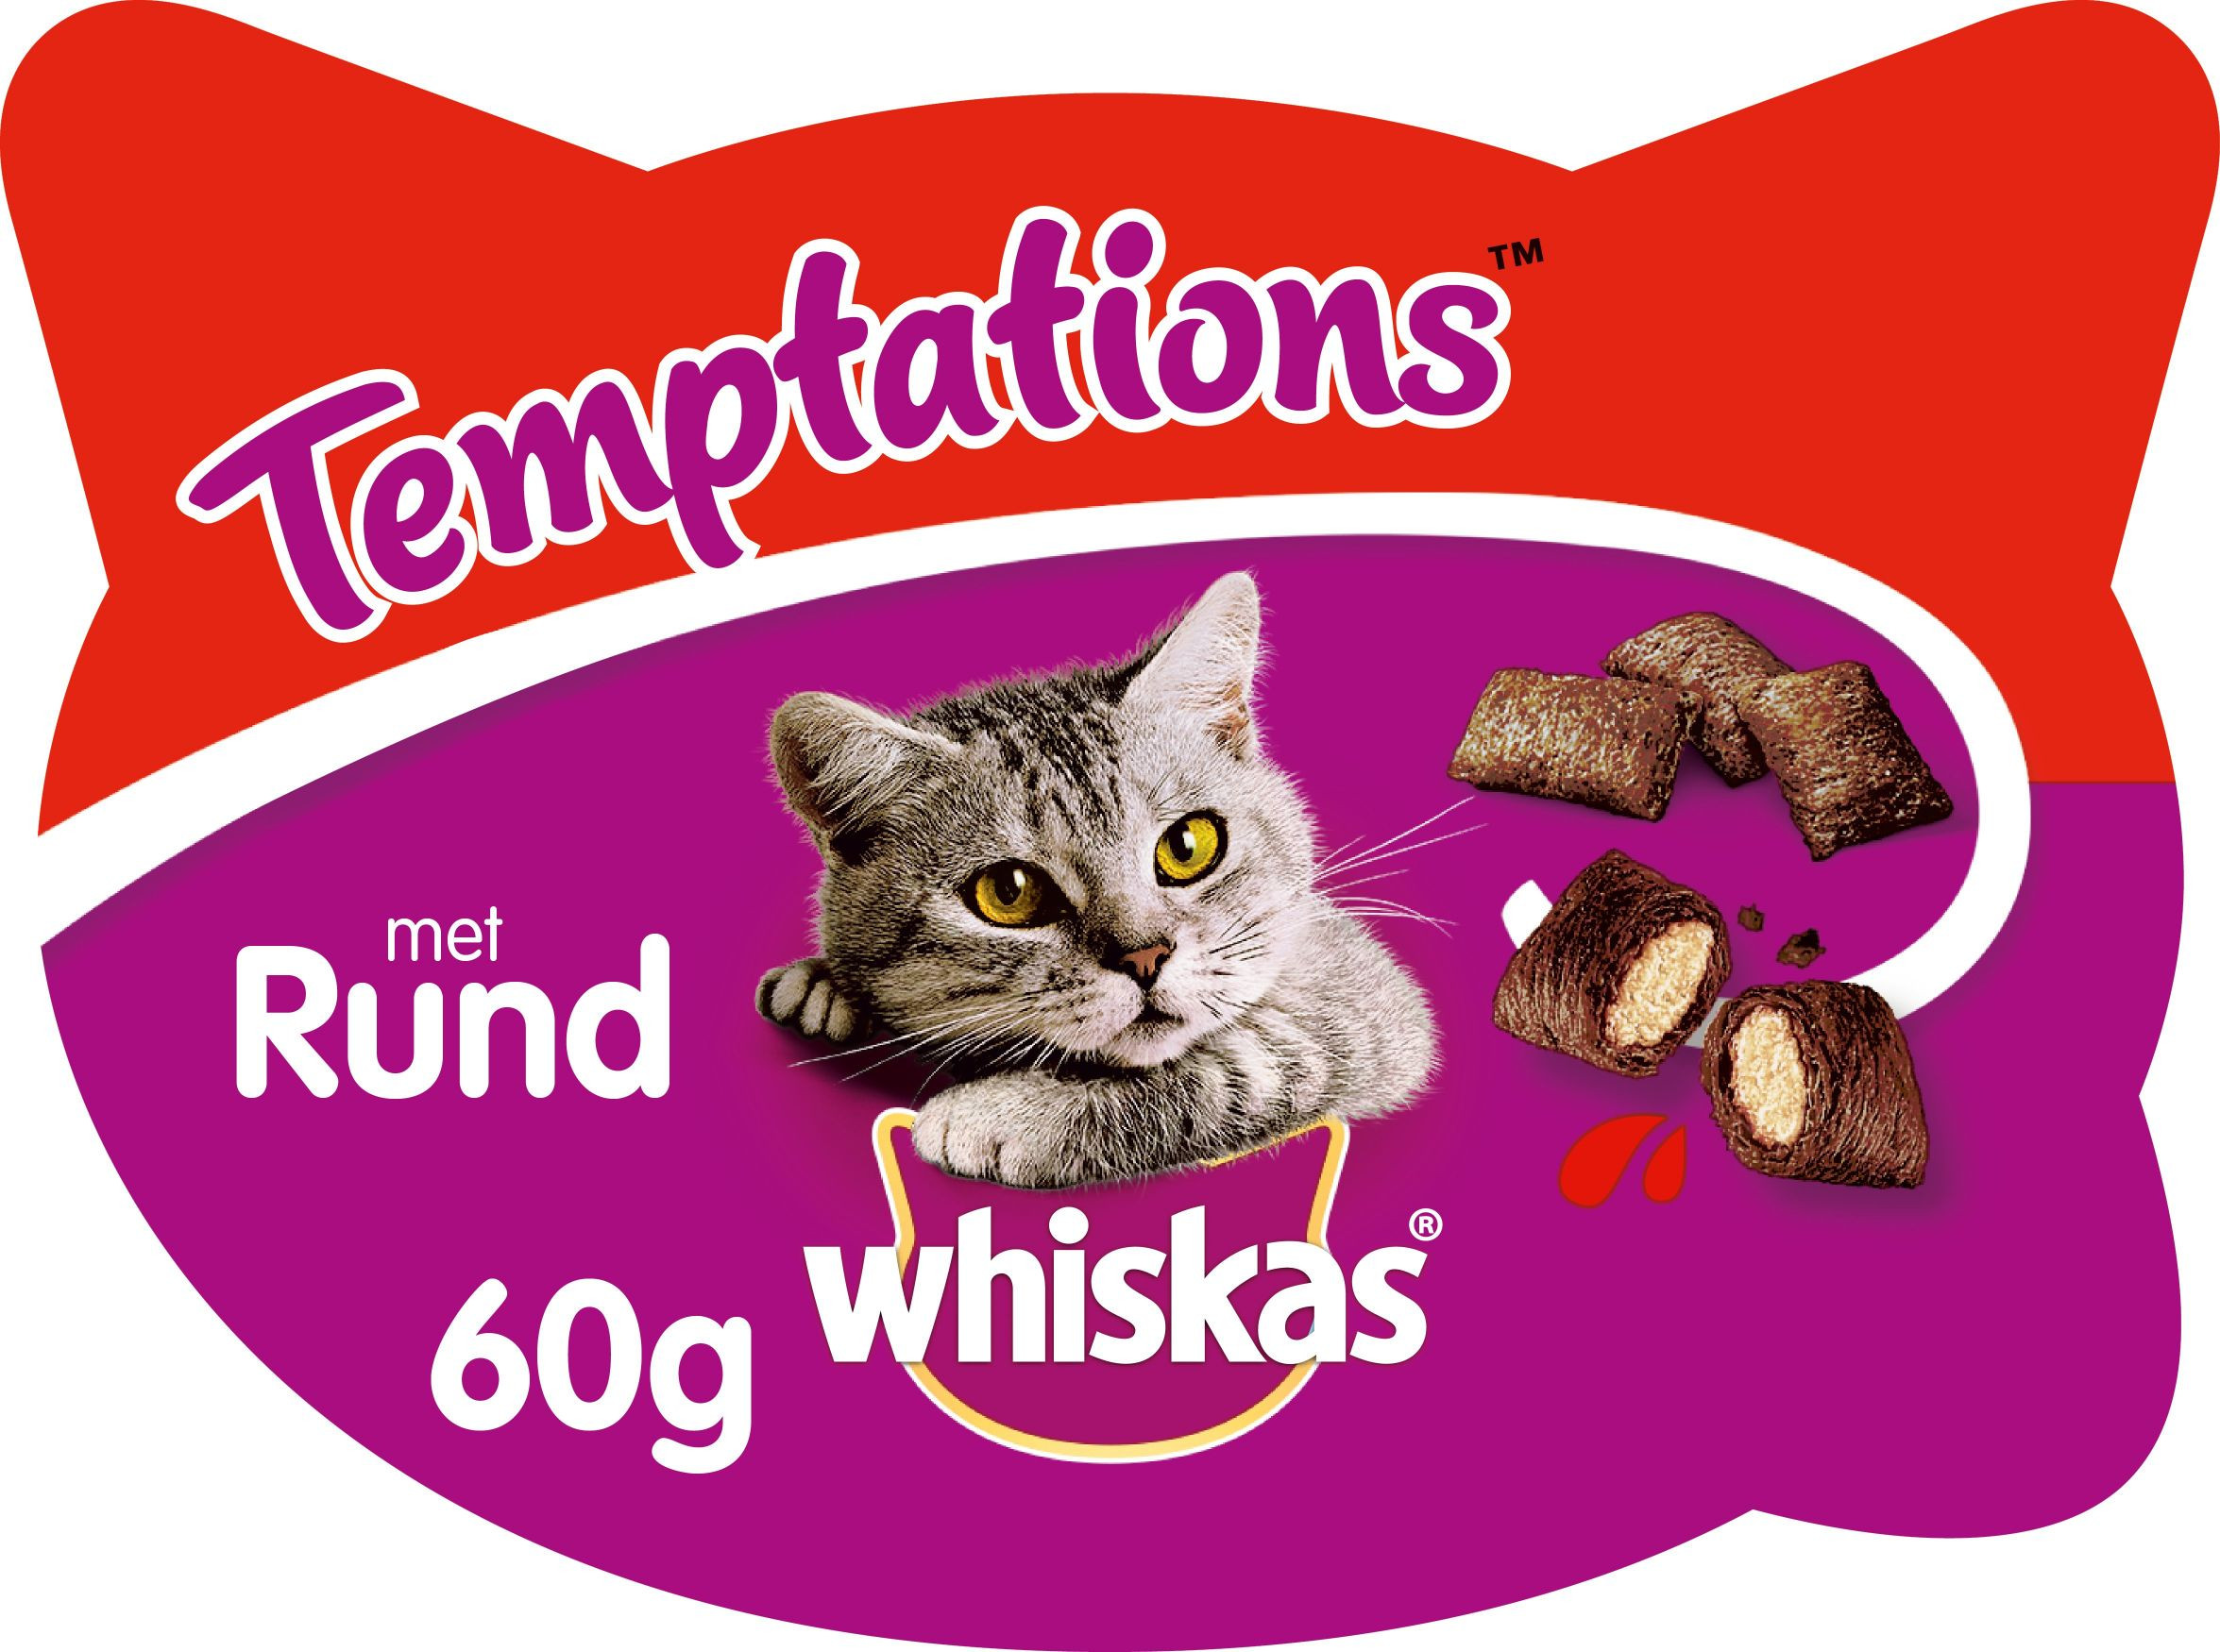 Whiskas Temptations met rund kattensnoep